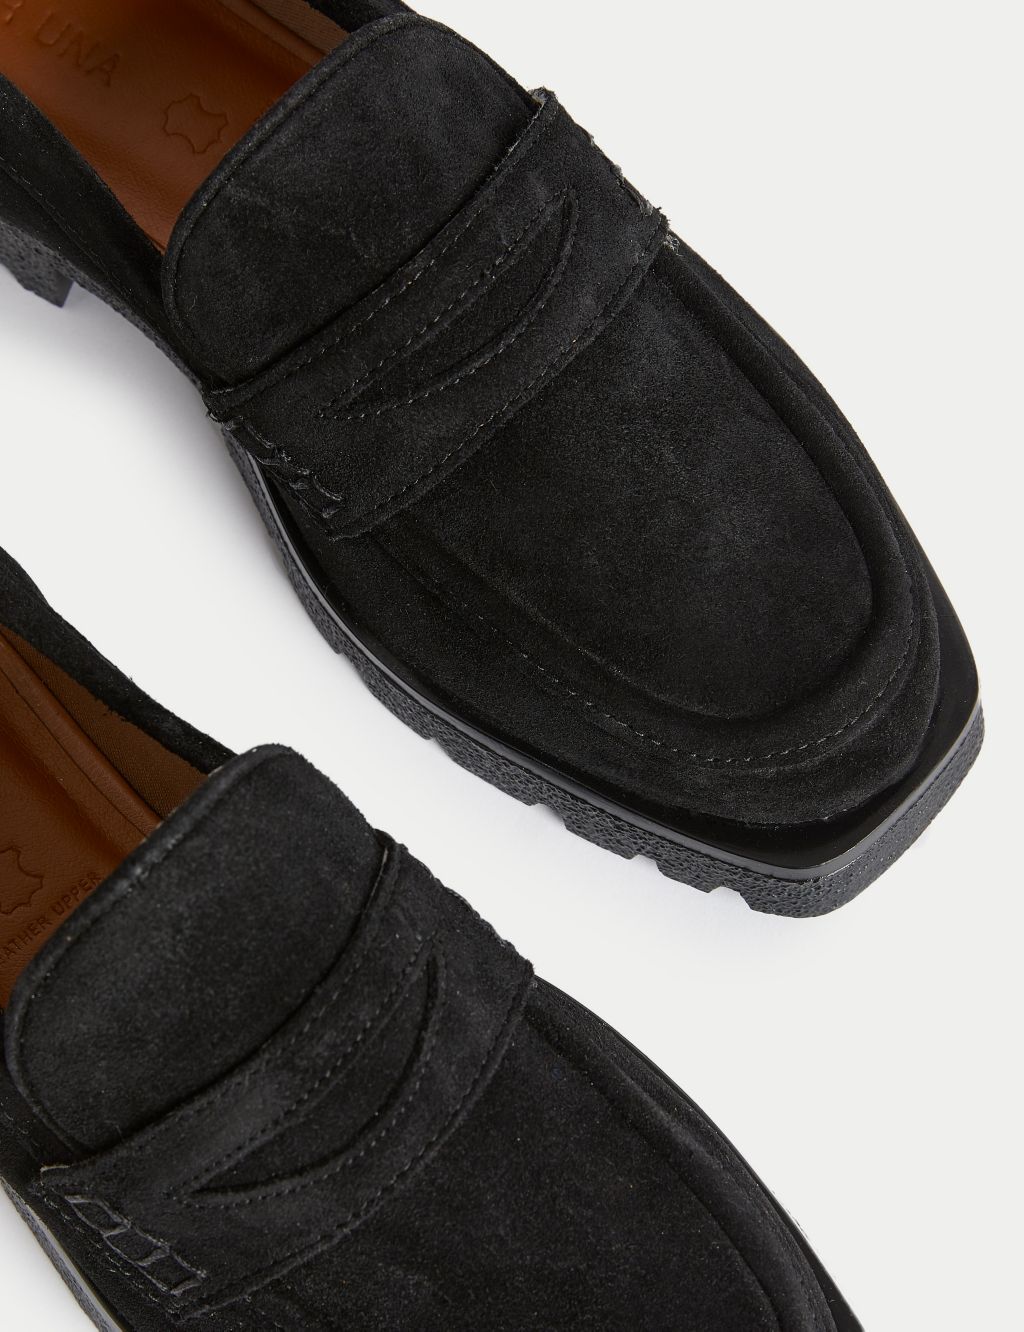 Suede Stain Resistant Block Heel Loafers image 3